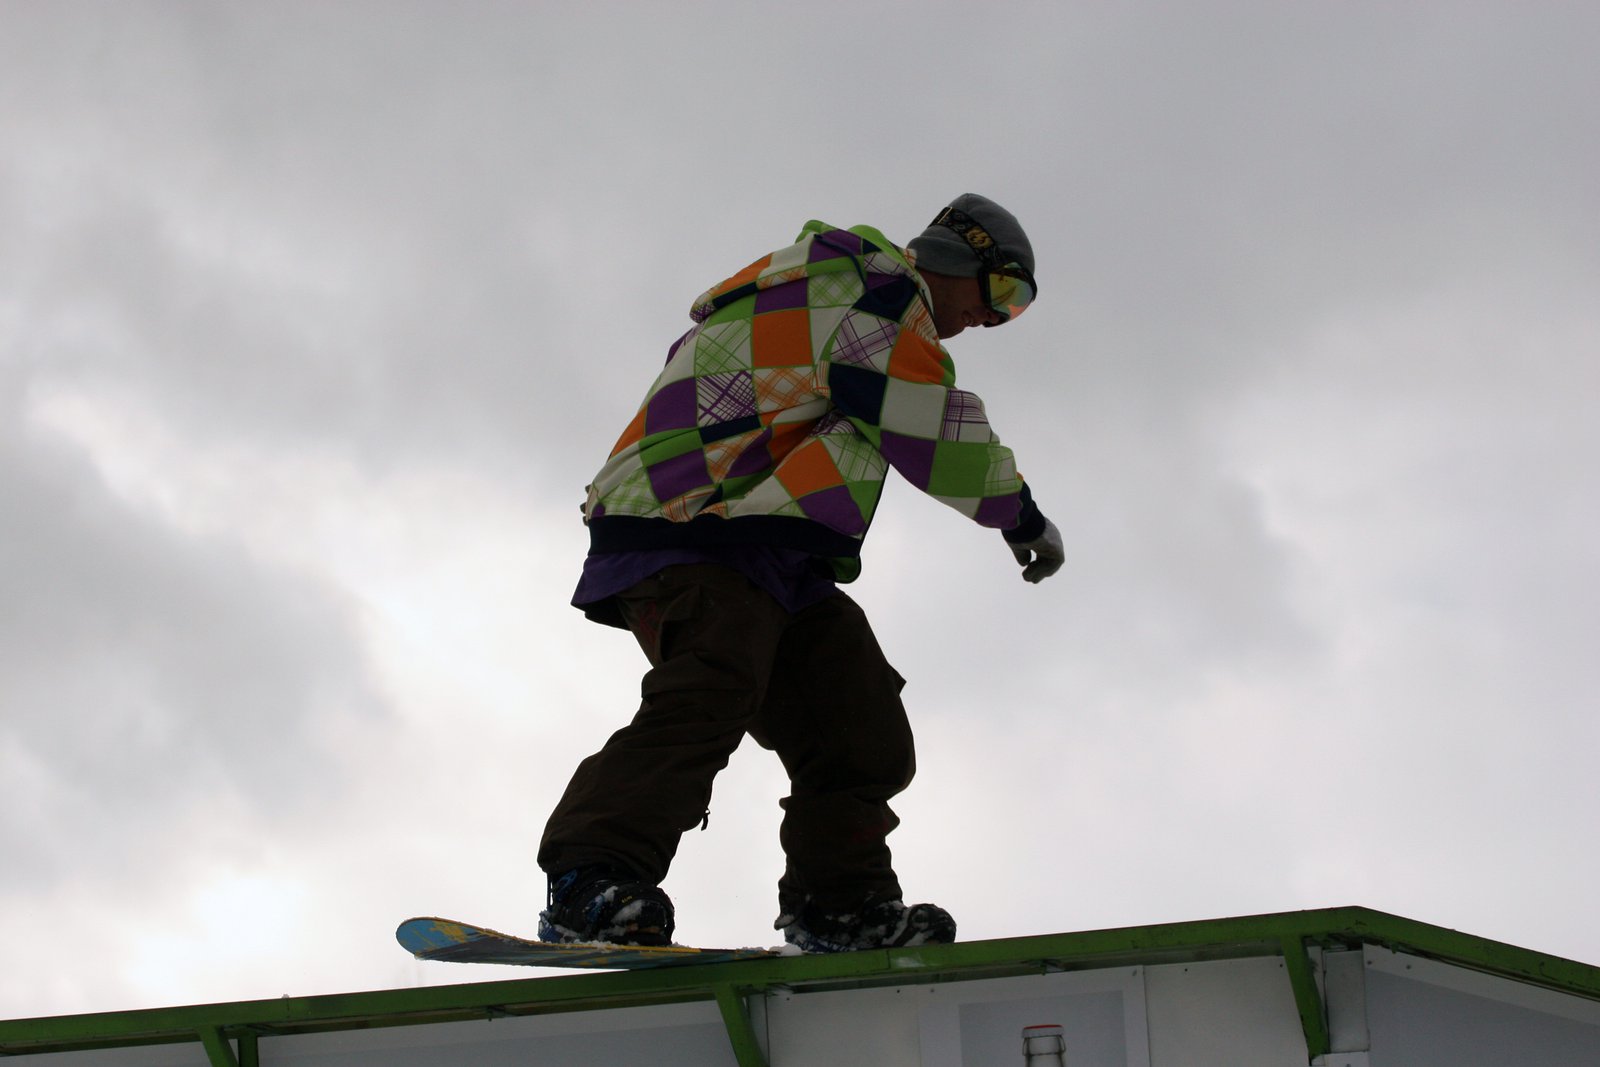 Snowboard bs kink #1